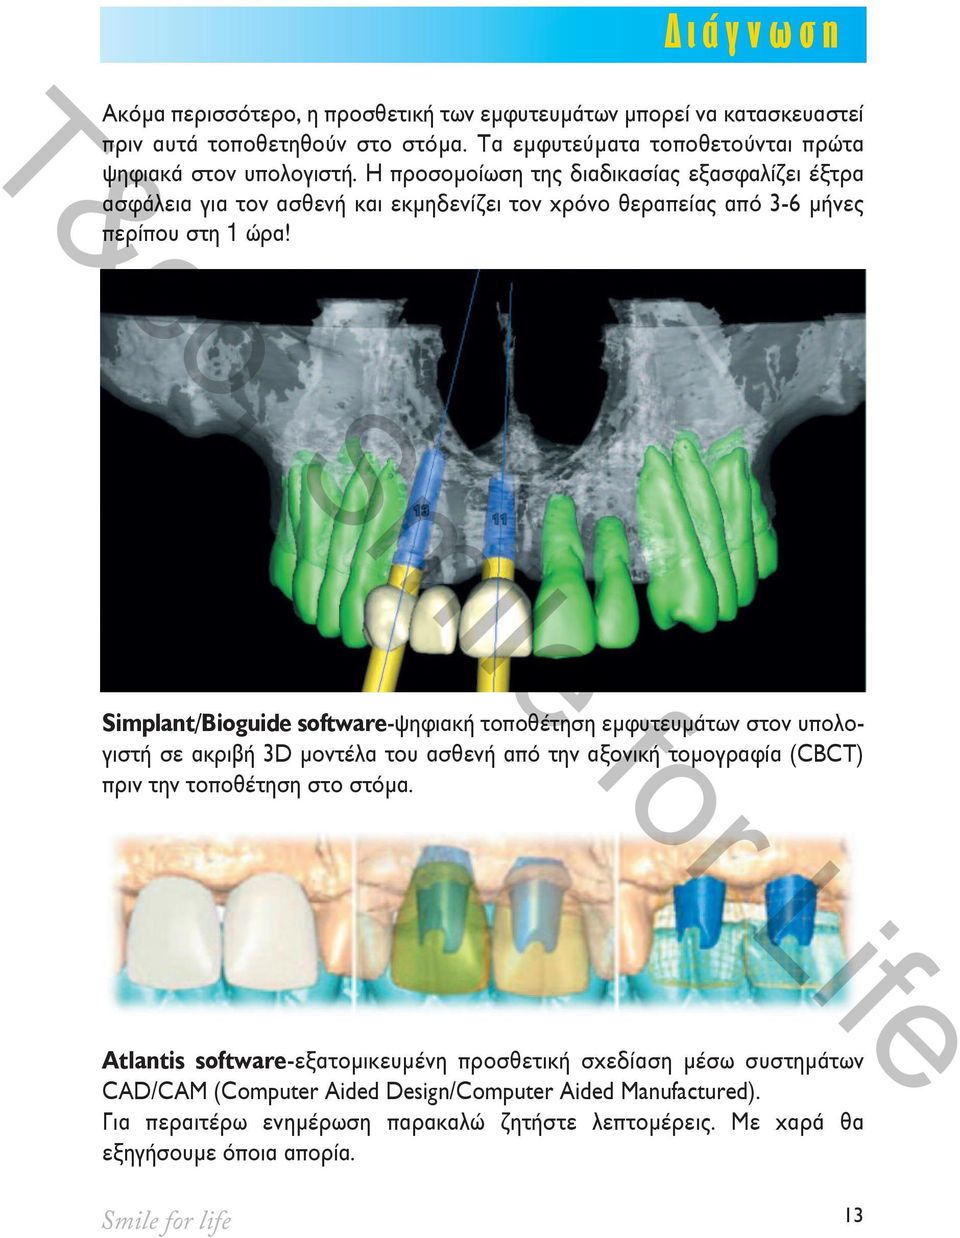 Simplant/Bioguide software-ψηφιακή τοποθέτηση εμφυτευμάτων στον υπολογιστή σε ακριβή 3D μοντέλα του ασθενή από την αξονική τομογραφία (CBCT) πριν την τοποθέτηση στο στόμα.